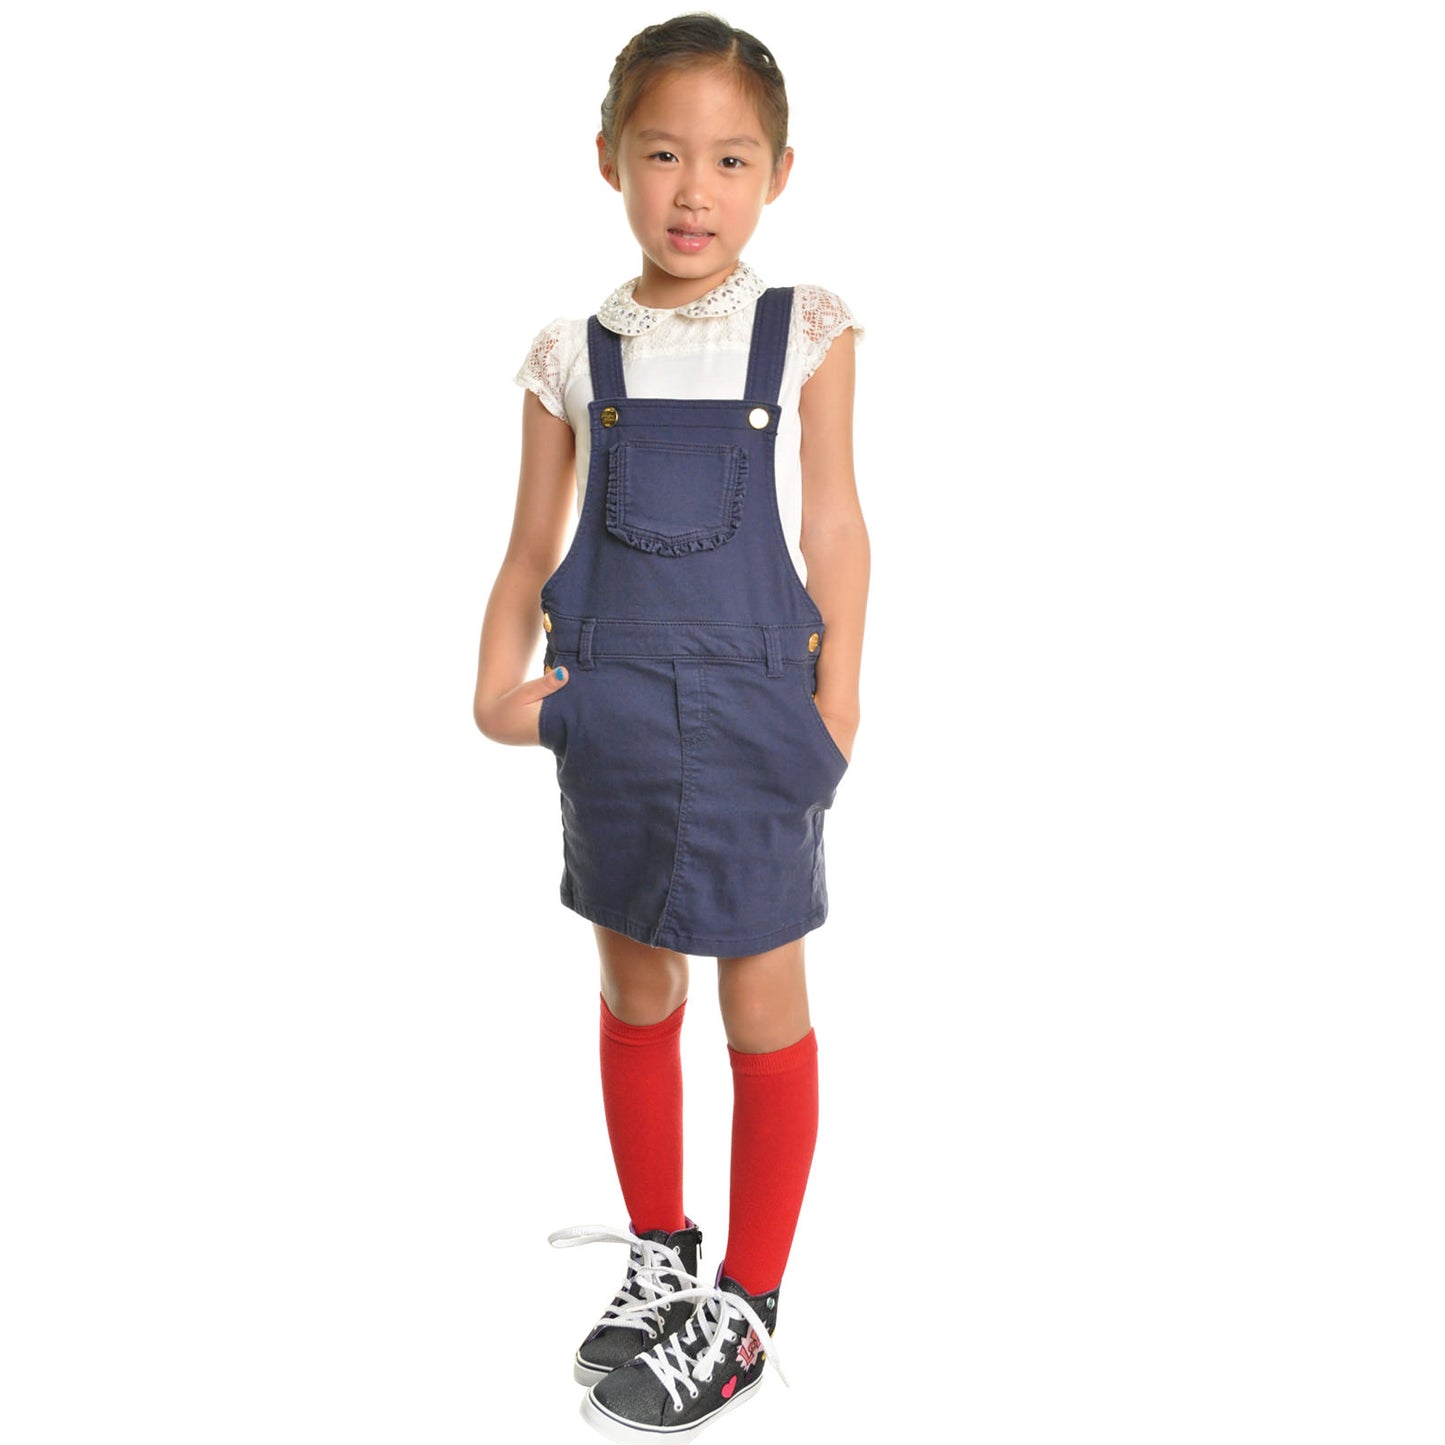 Angelina Classic Uniform Knee-High School Socks (12-Pairs), #3102